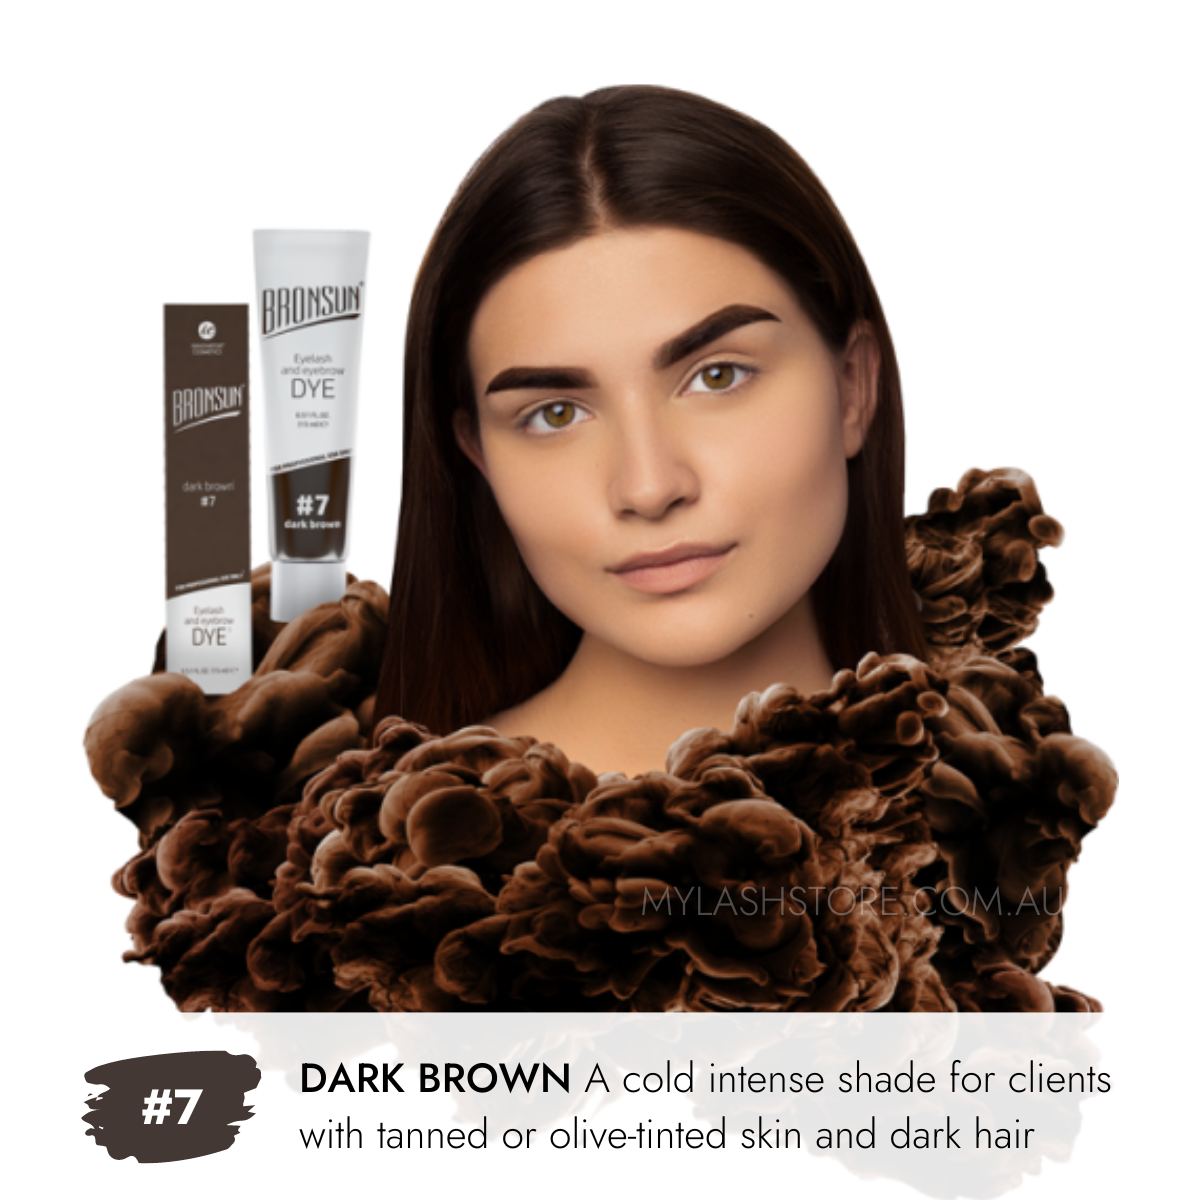 Bronsun Lash & Brow Gel Dye #7 Dark Brown - My Lash Store